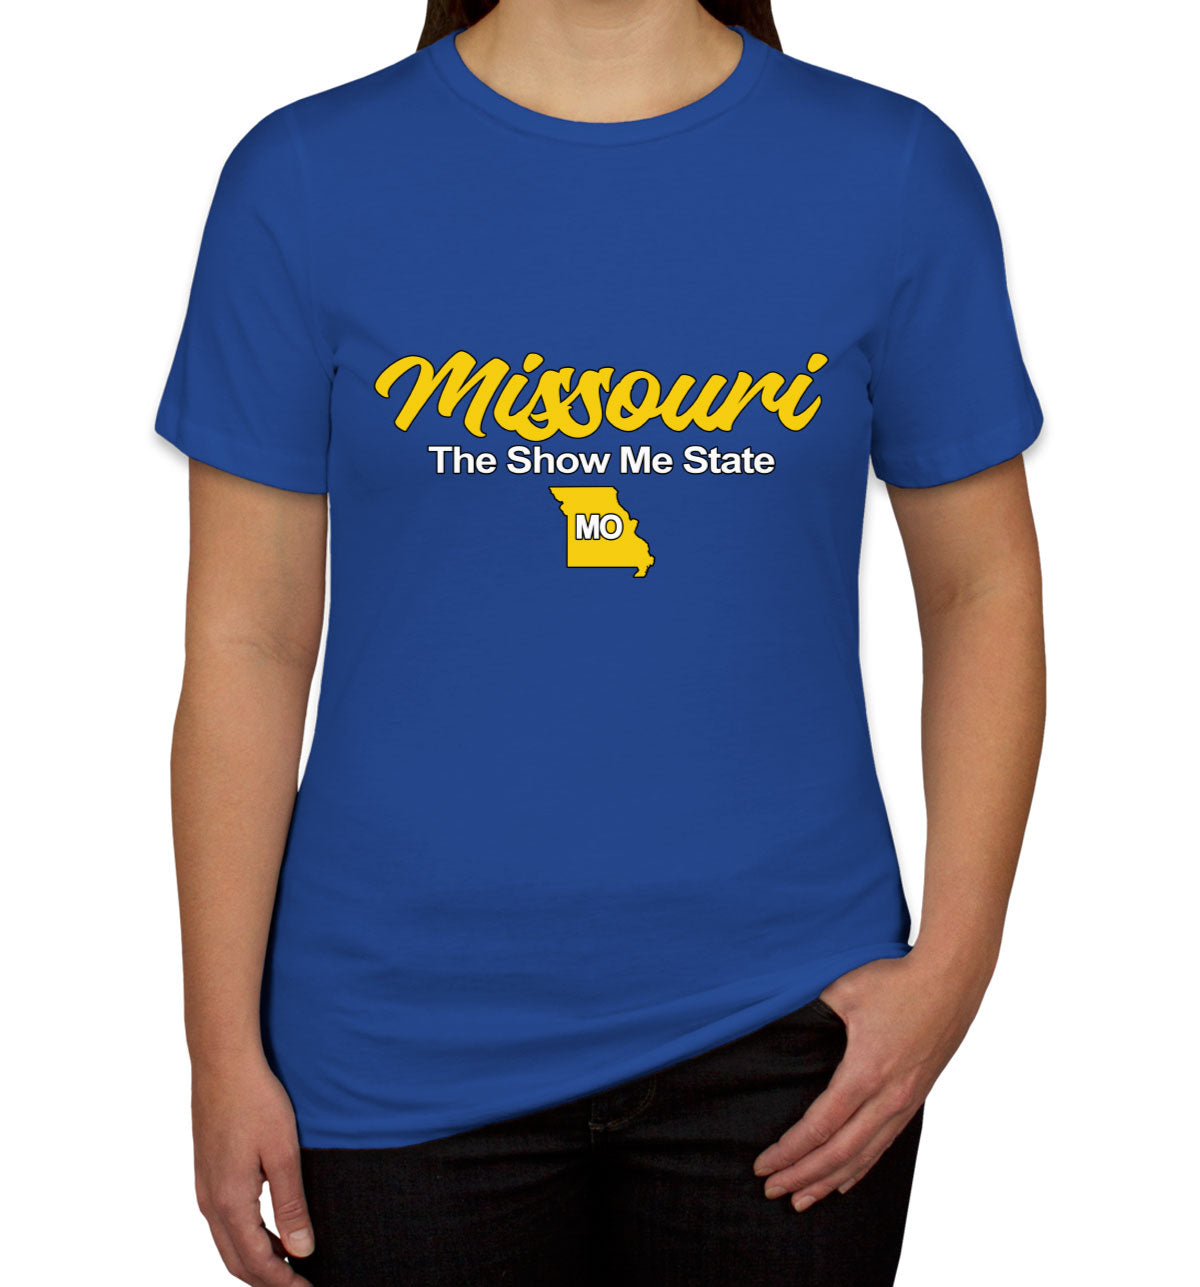 Missouri The Show Me State Women's T-shirt